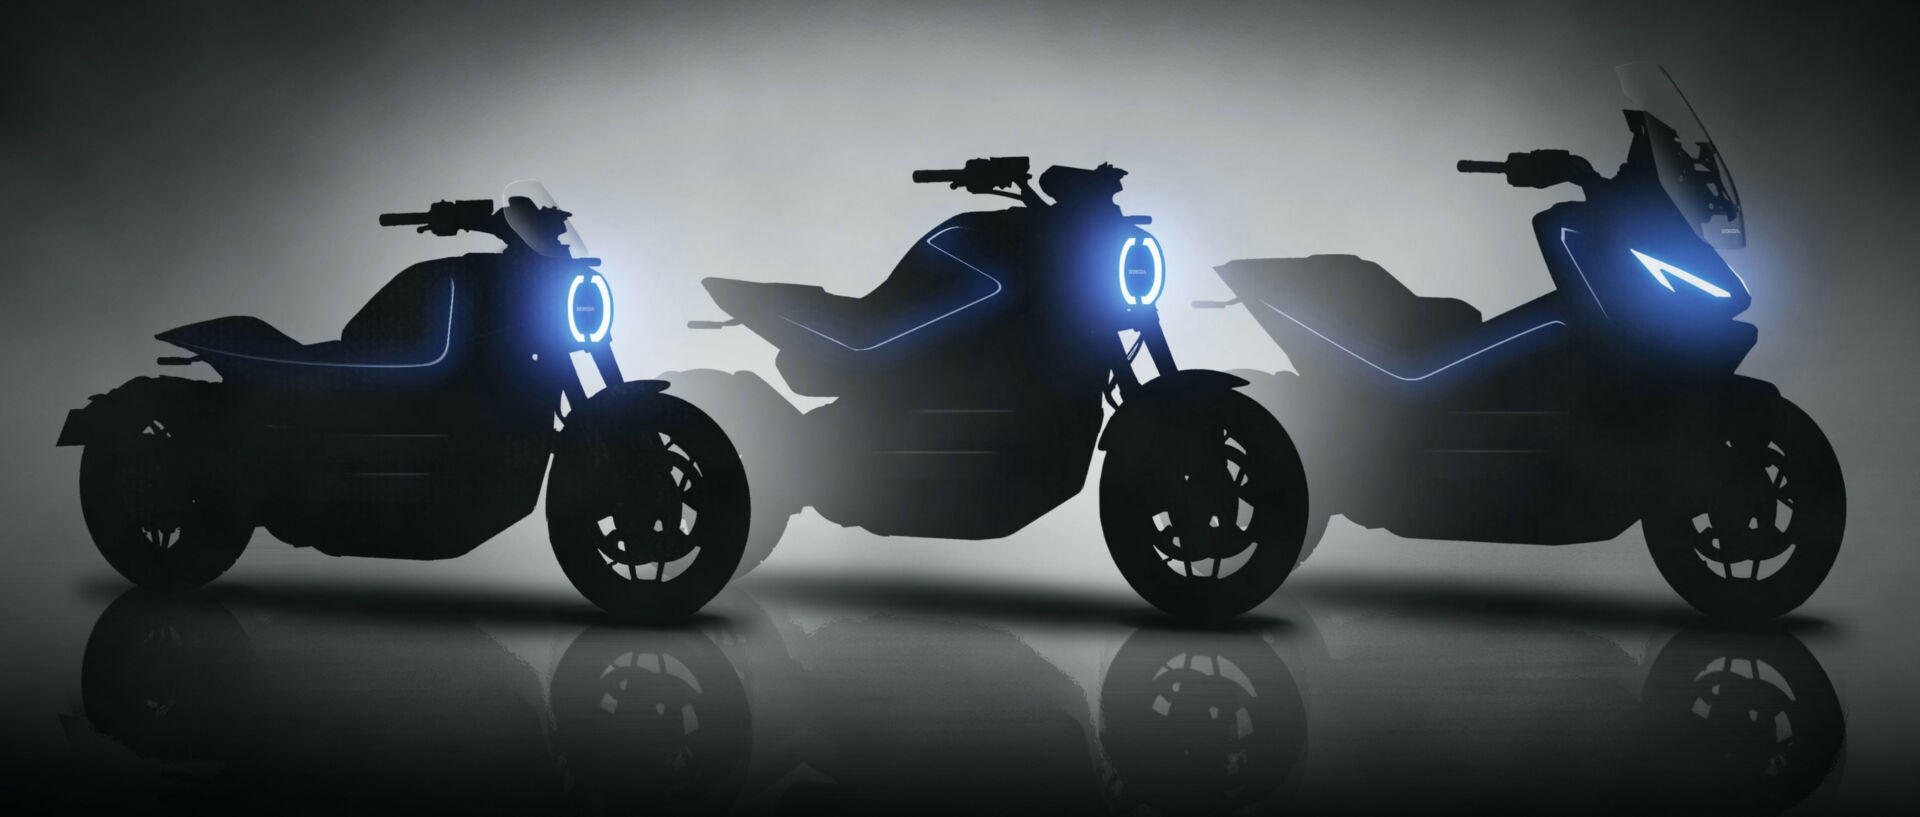 Silhouettes of three of Honda's upcoming 